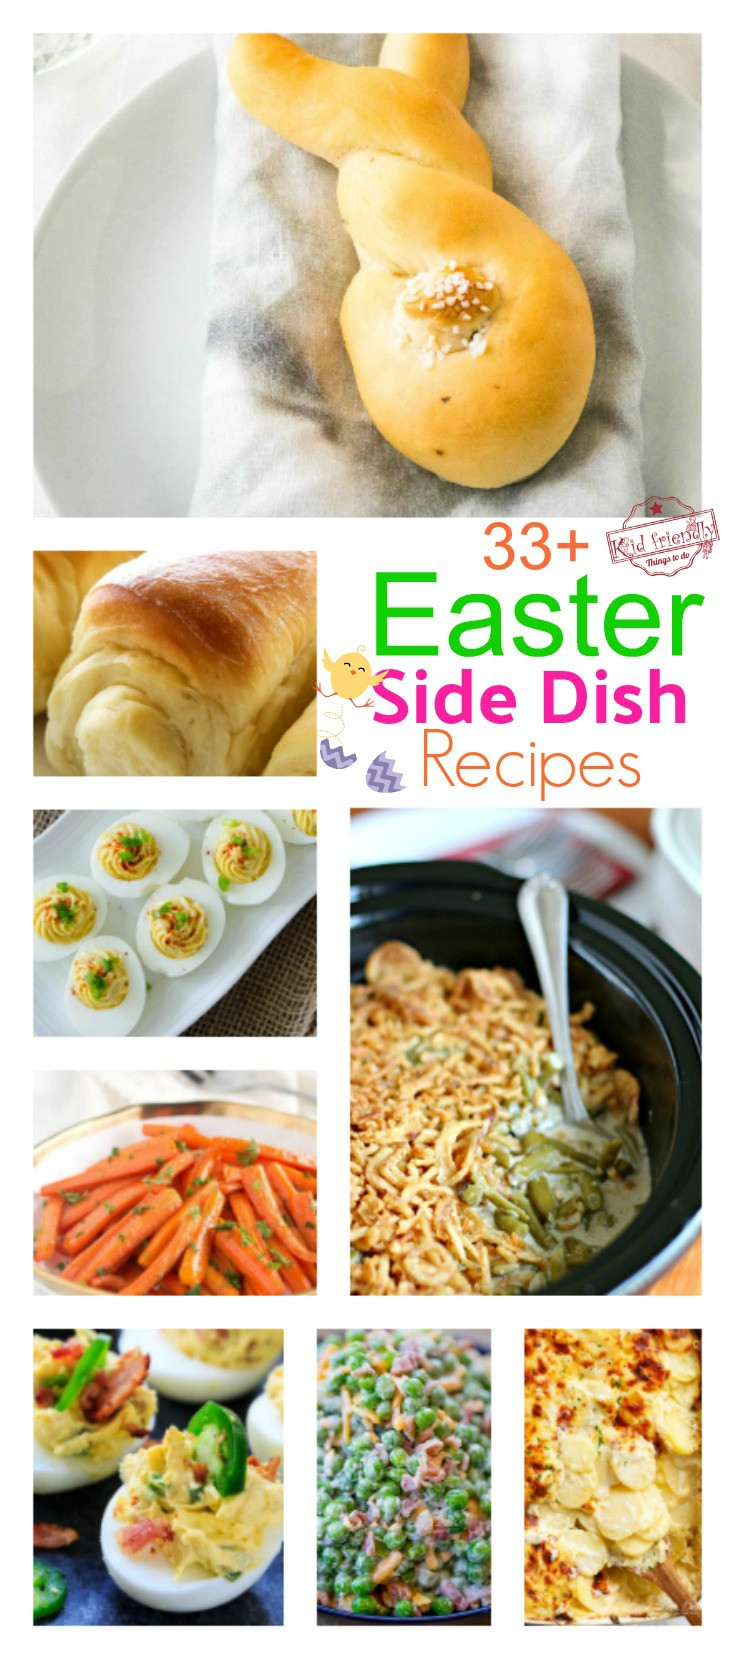 Side Dish For Easter Dinner
 Over 33 Easter Side Dish Recipes for Your Celebration Dinner